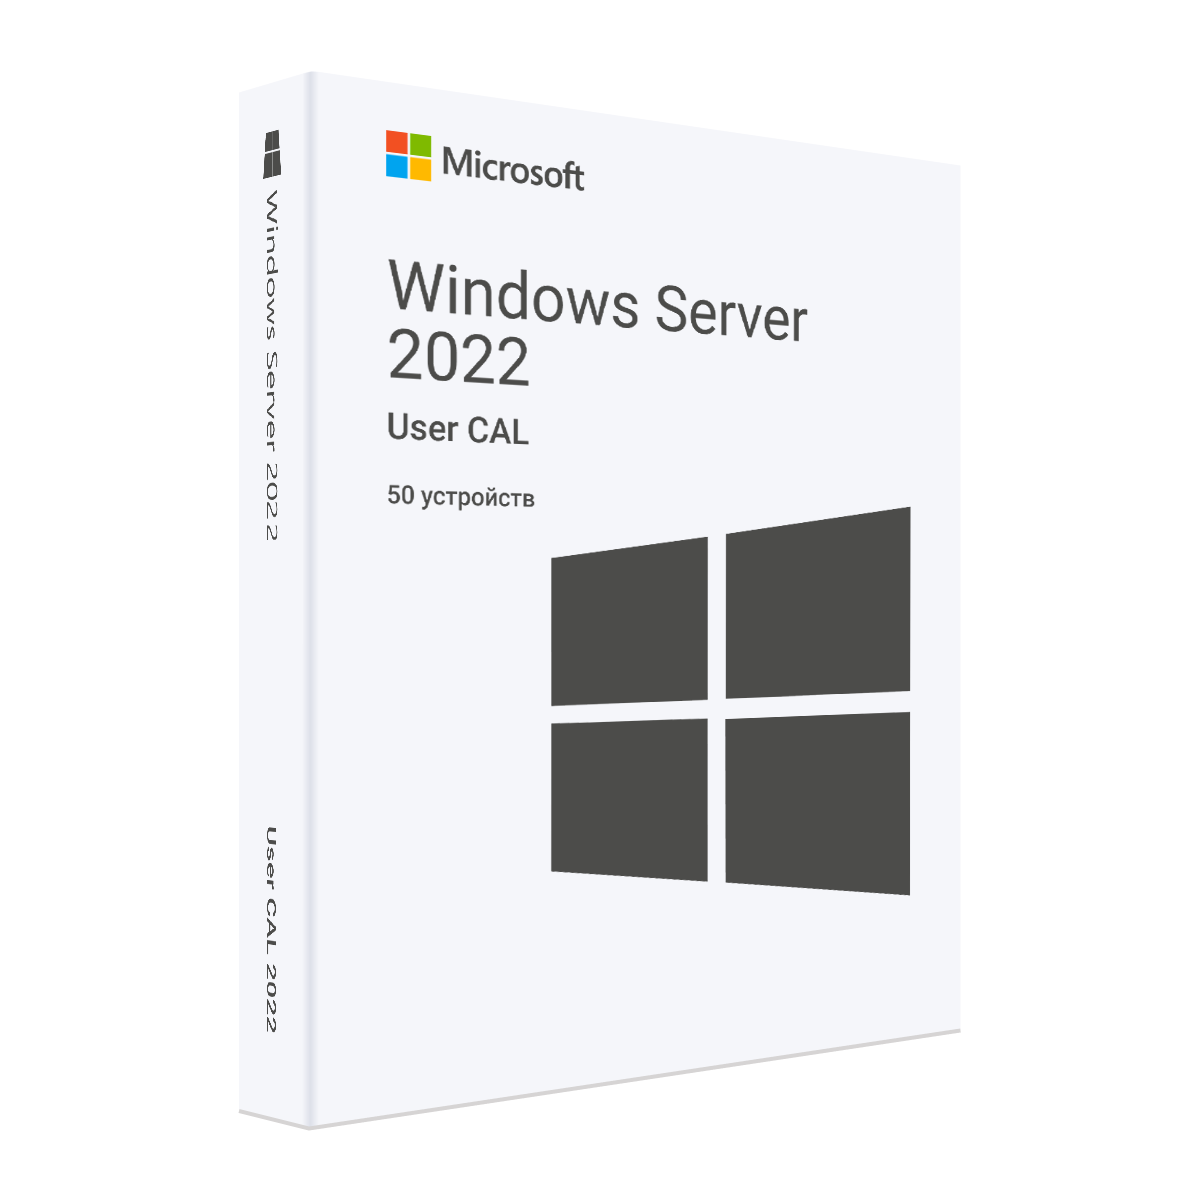 Windows Server 2022 RDS Device CAL (50 устройств)